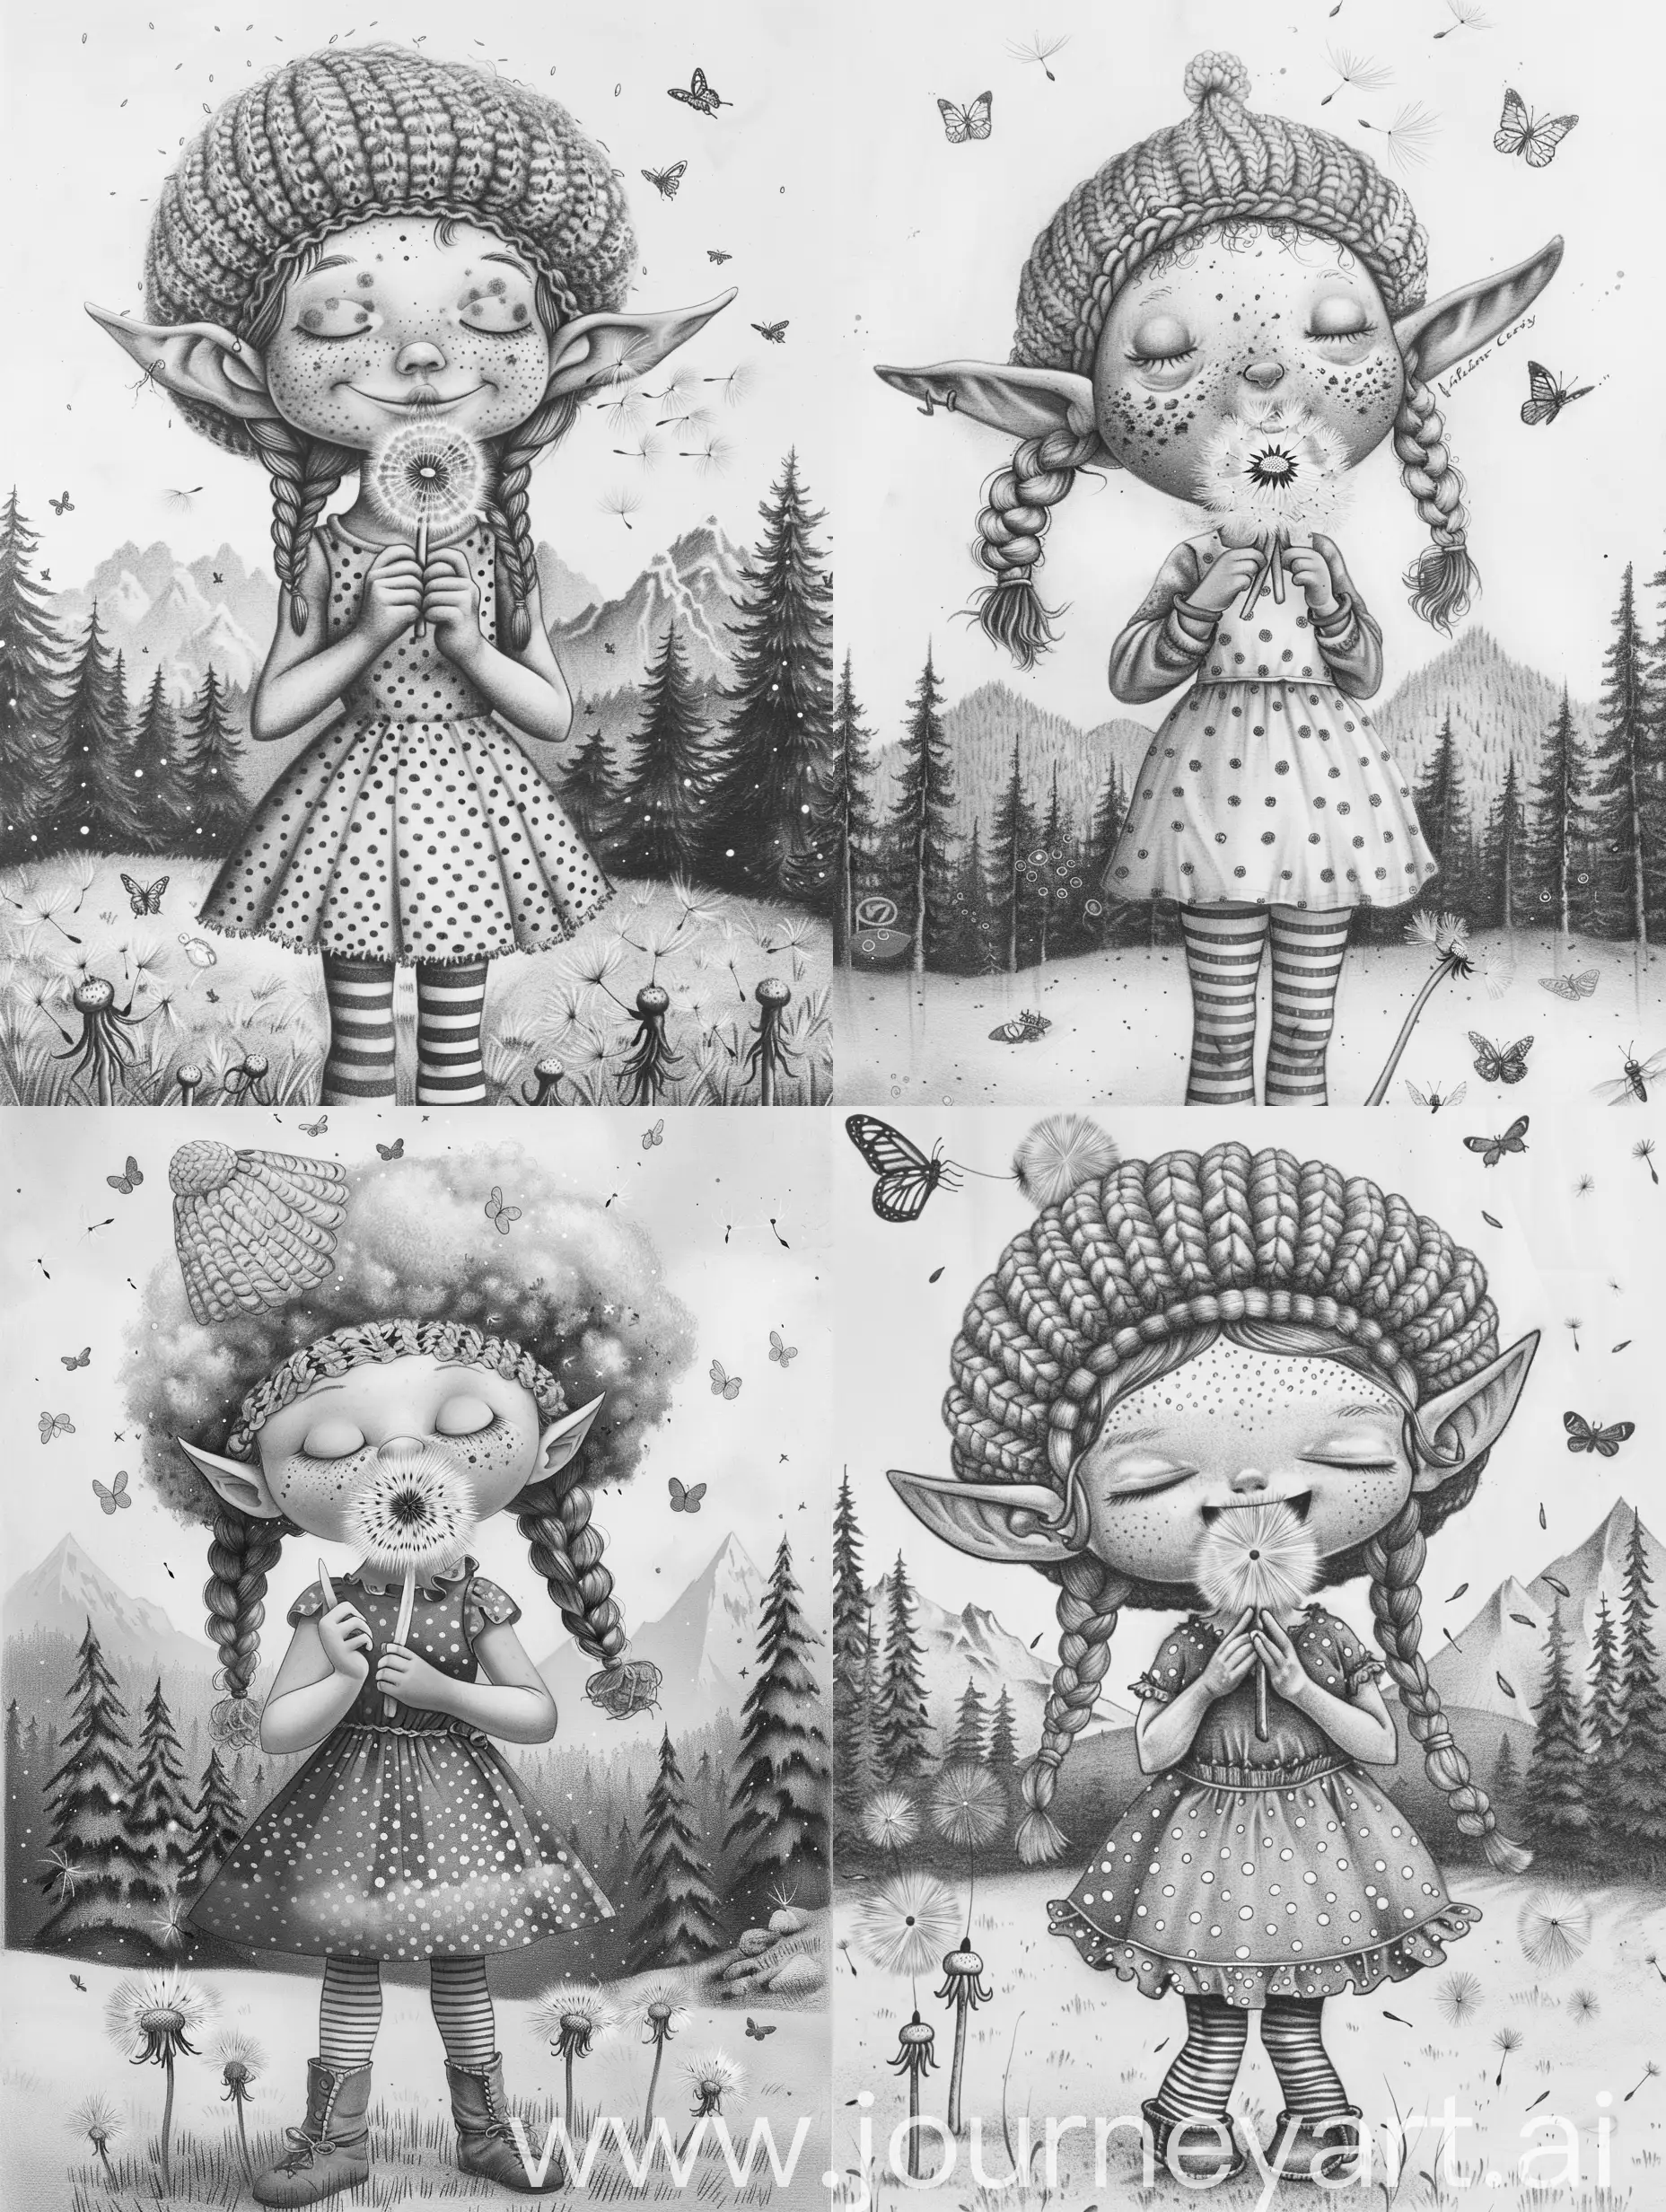 Cheerful-Elf-Girl-Blowing-Dandelion-Fluff-in-Mountain-Forest-Scene